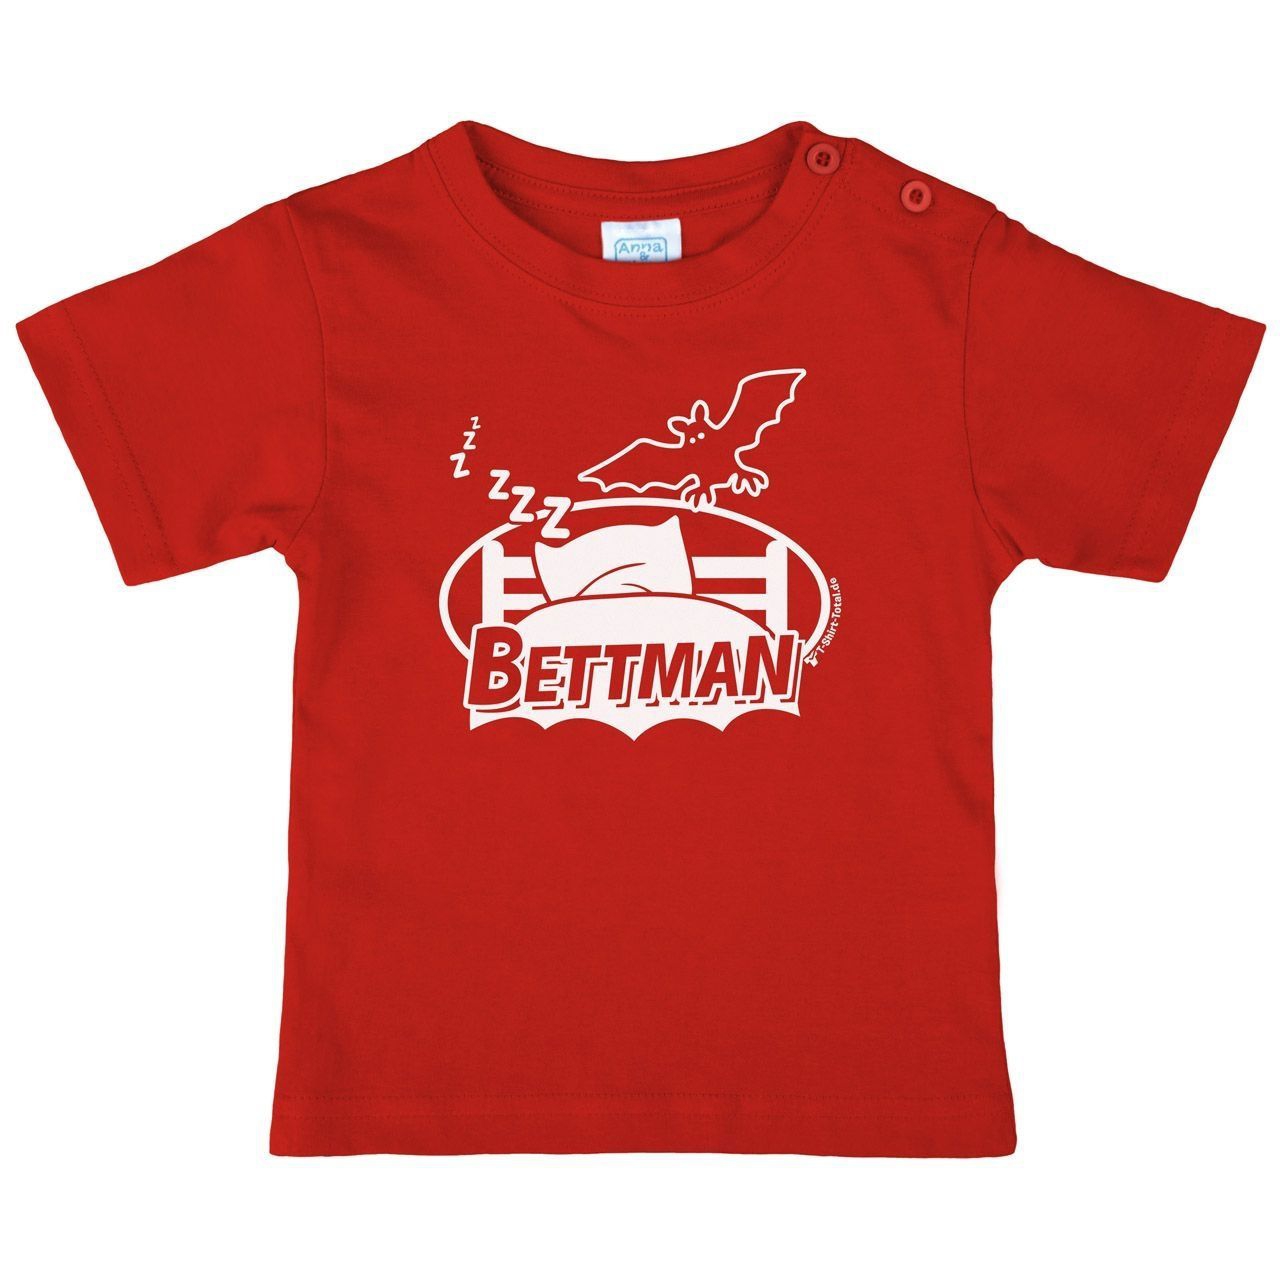 Bettman Kinder T-Shirt rot 56 / 62